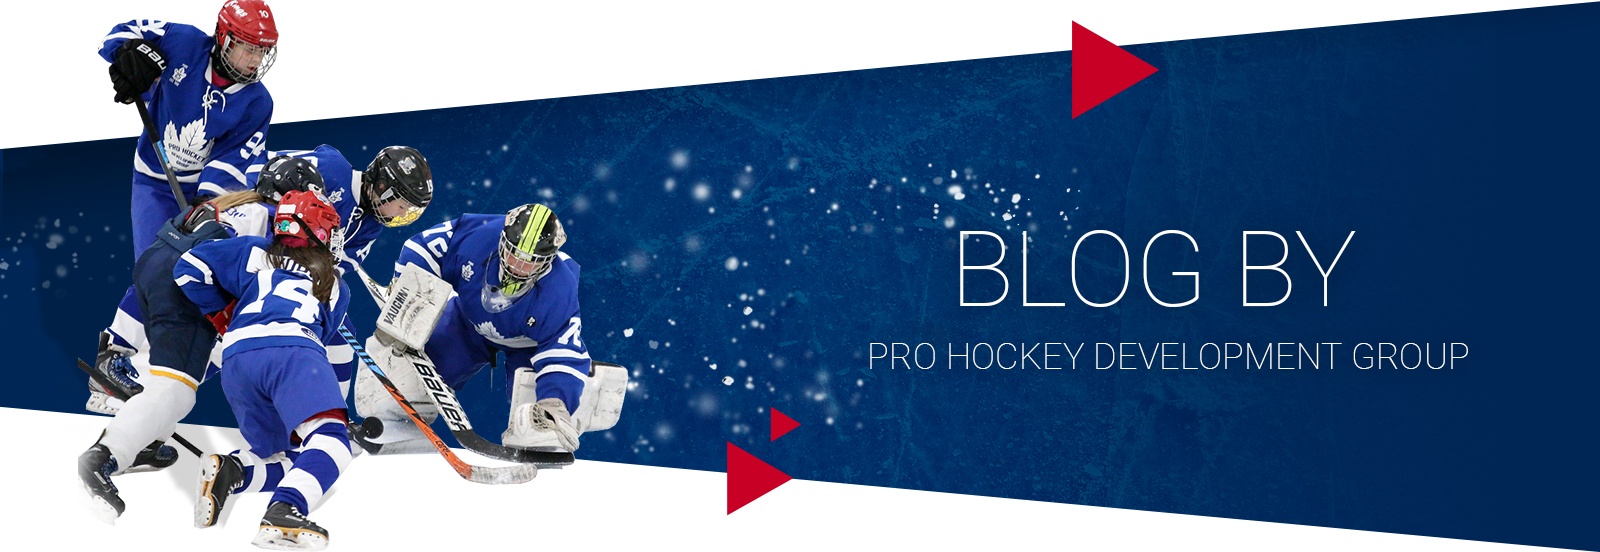 Pro Hockey Development Group Blog